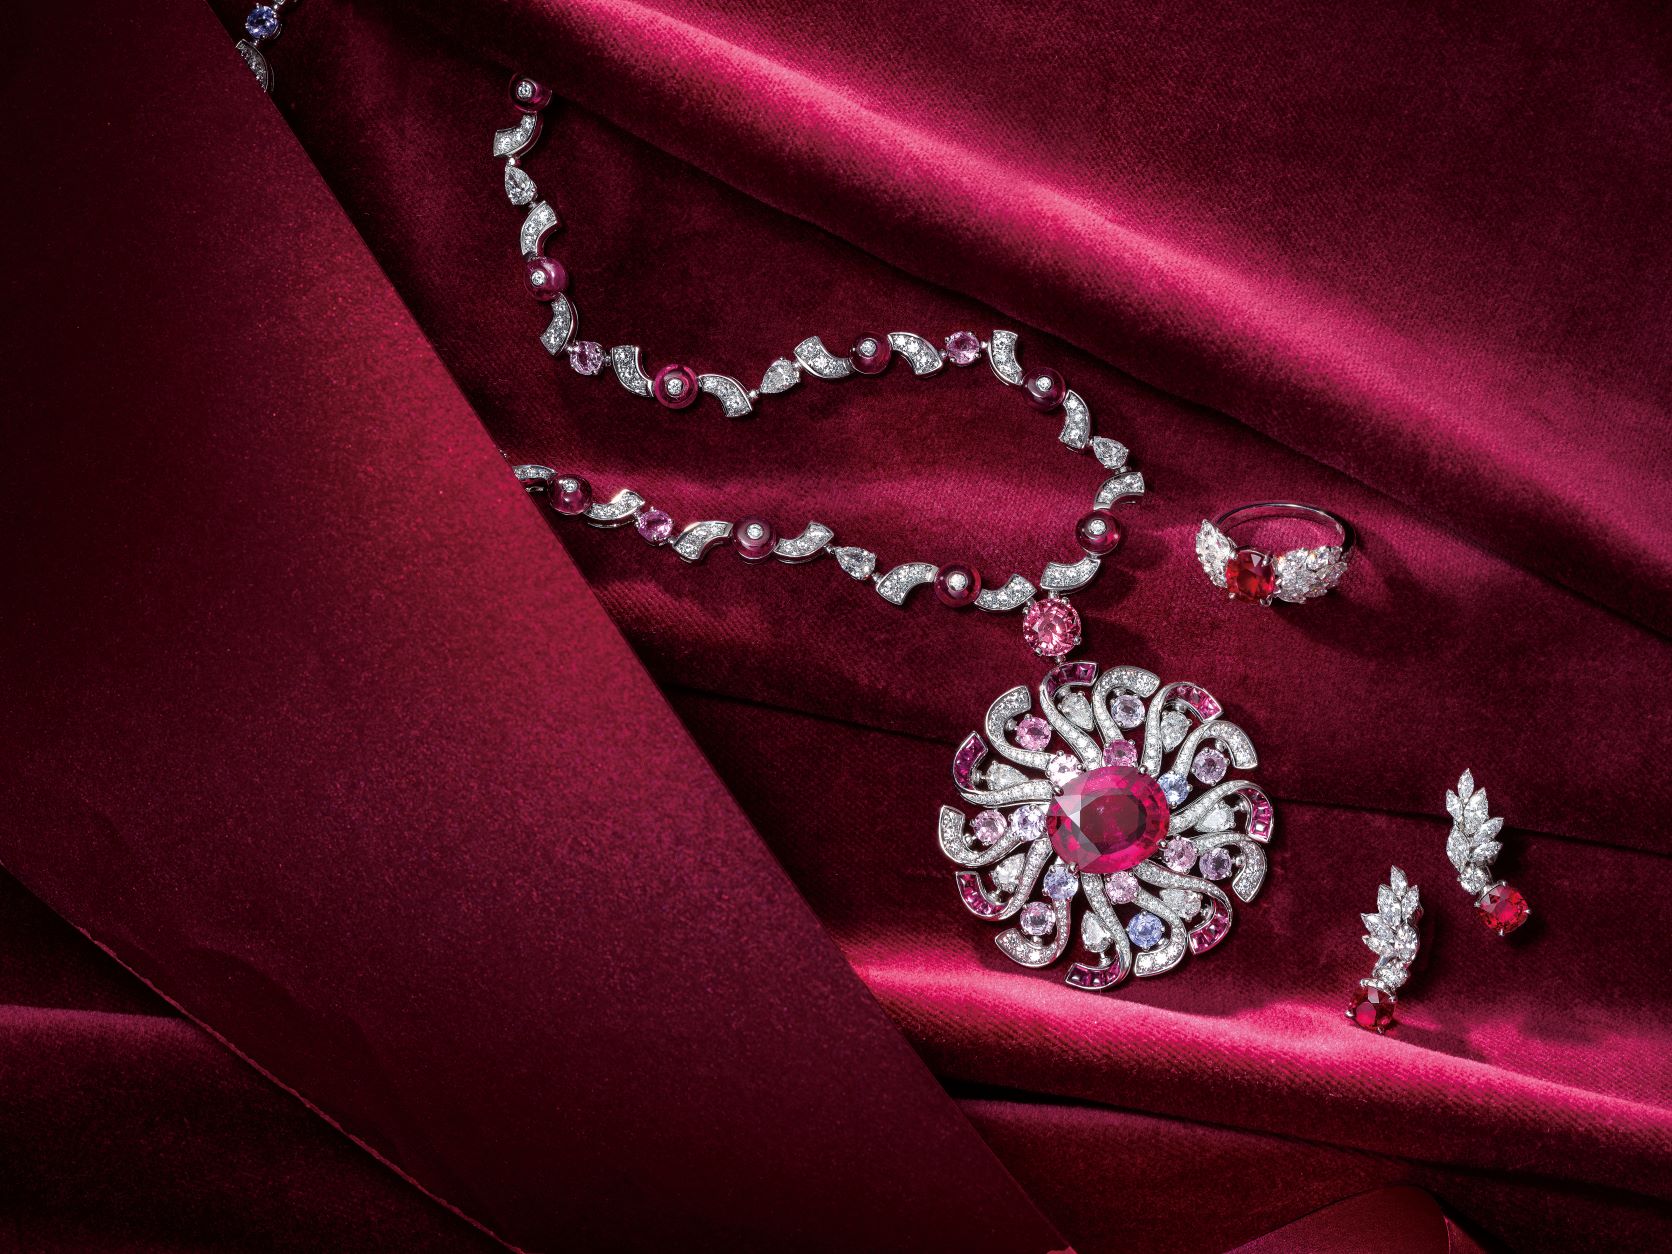 Bulgari MAGNIFICA 系列頂級紅碧璽、尖晶石與鑽石項鍊。Piaget Treasures 系列紅寶石高級珠寶鑽石耳環。Piaget Treasures 系列紅寶石高級珠寶鑽石戒指。